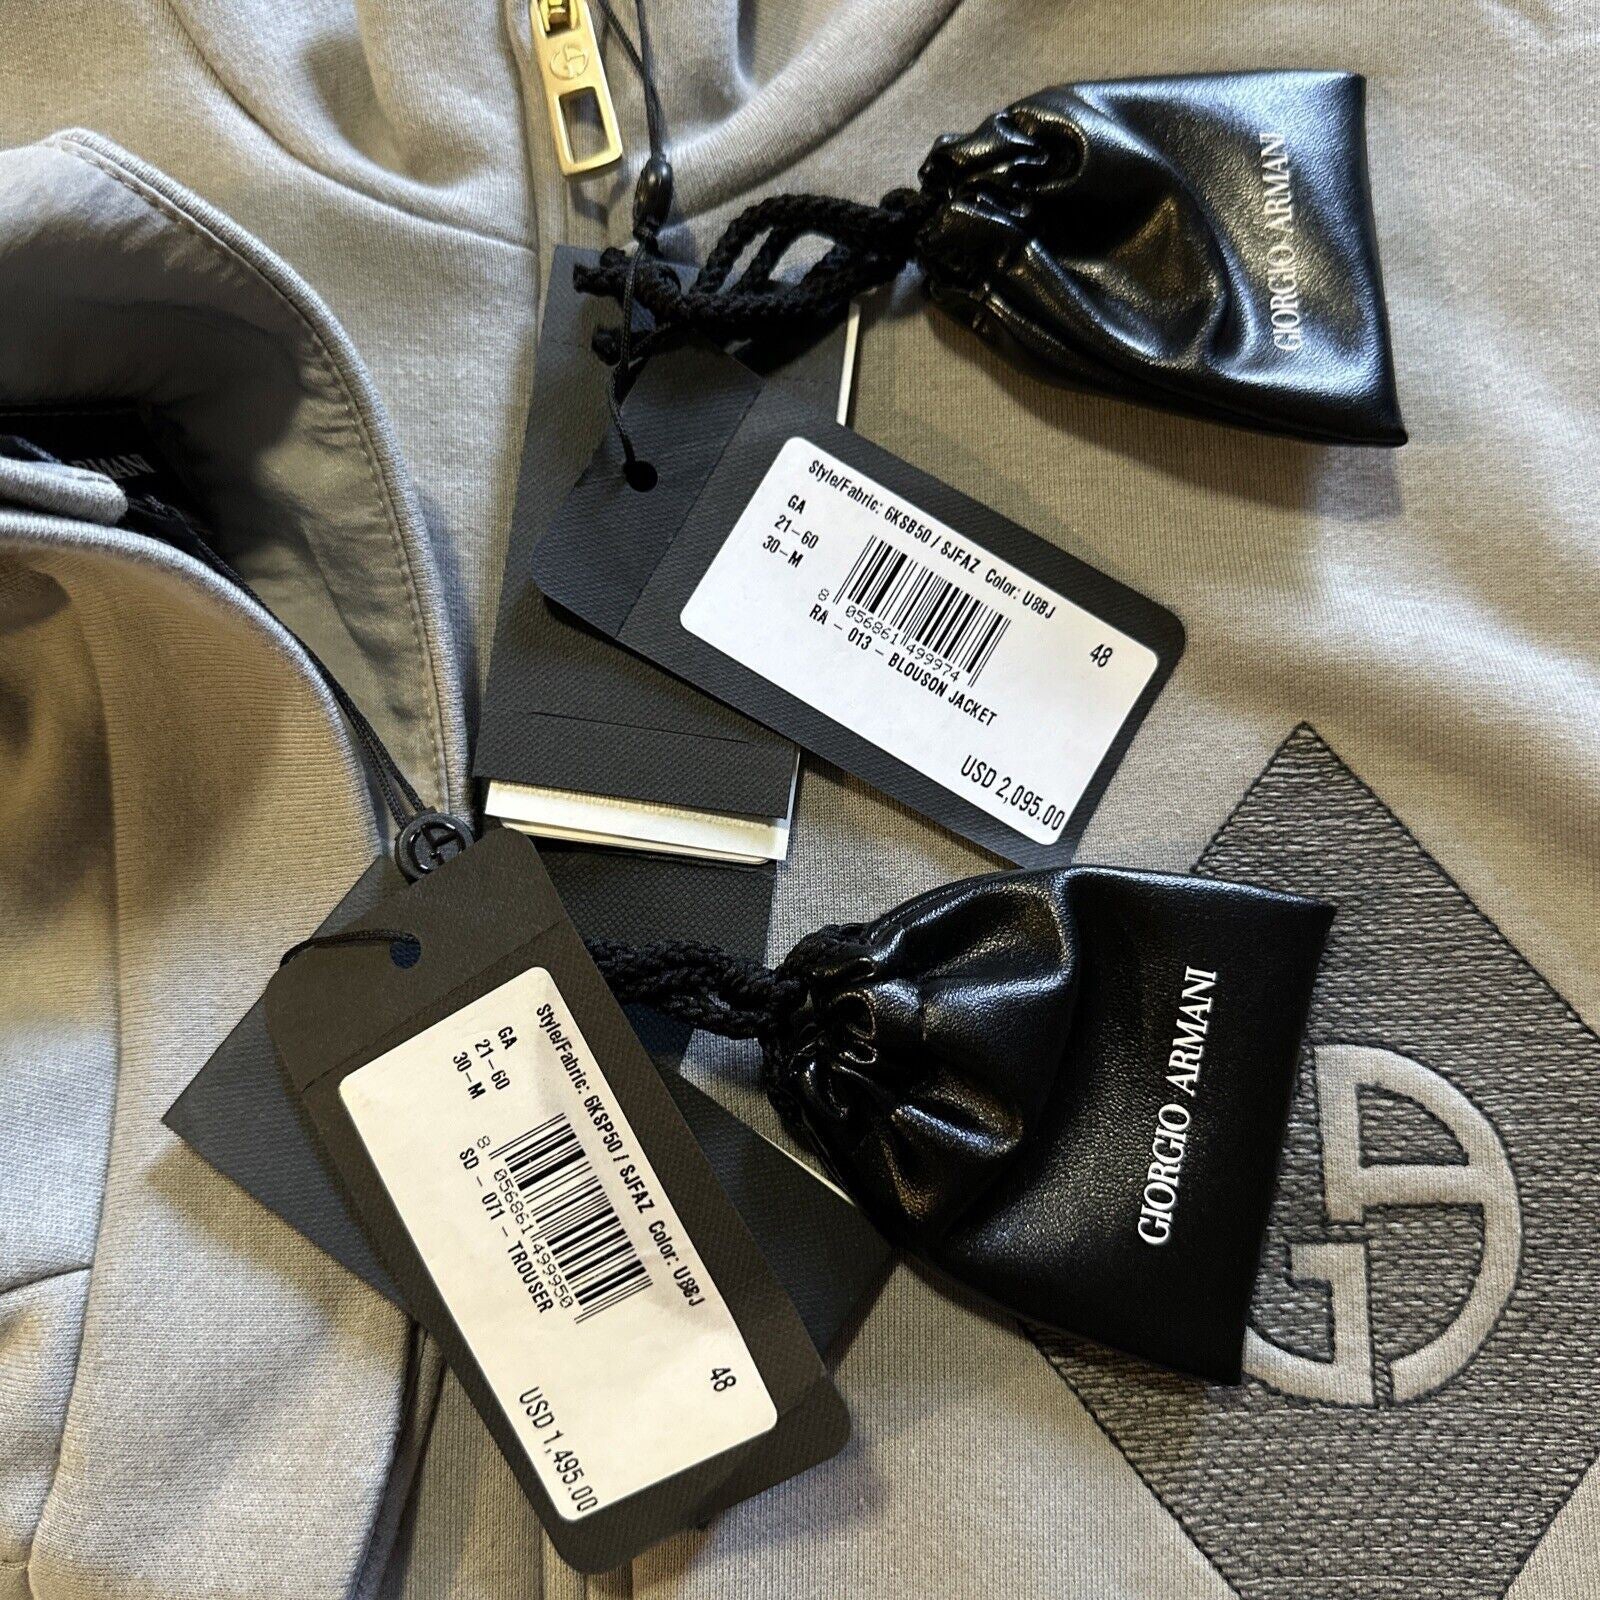 Neuer 3590 $ Giorgio Armani Herren-Trainingsanzug, Farbe Nebbia/Grau, 38 US/48 Eu, Italien